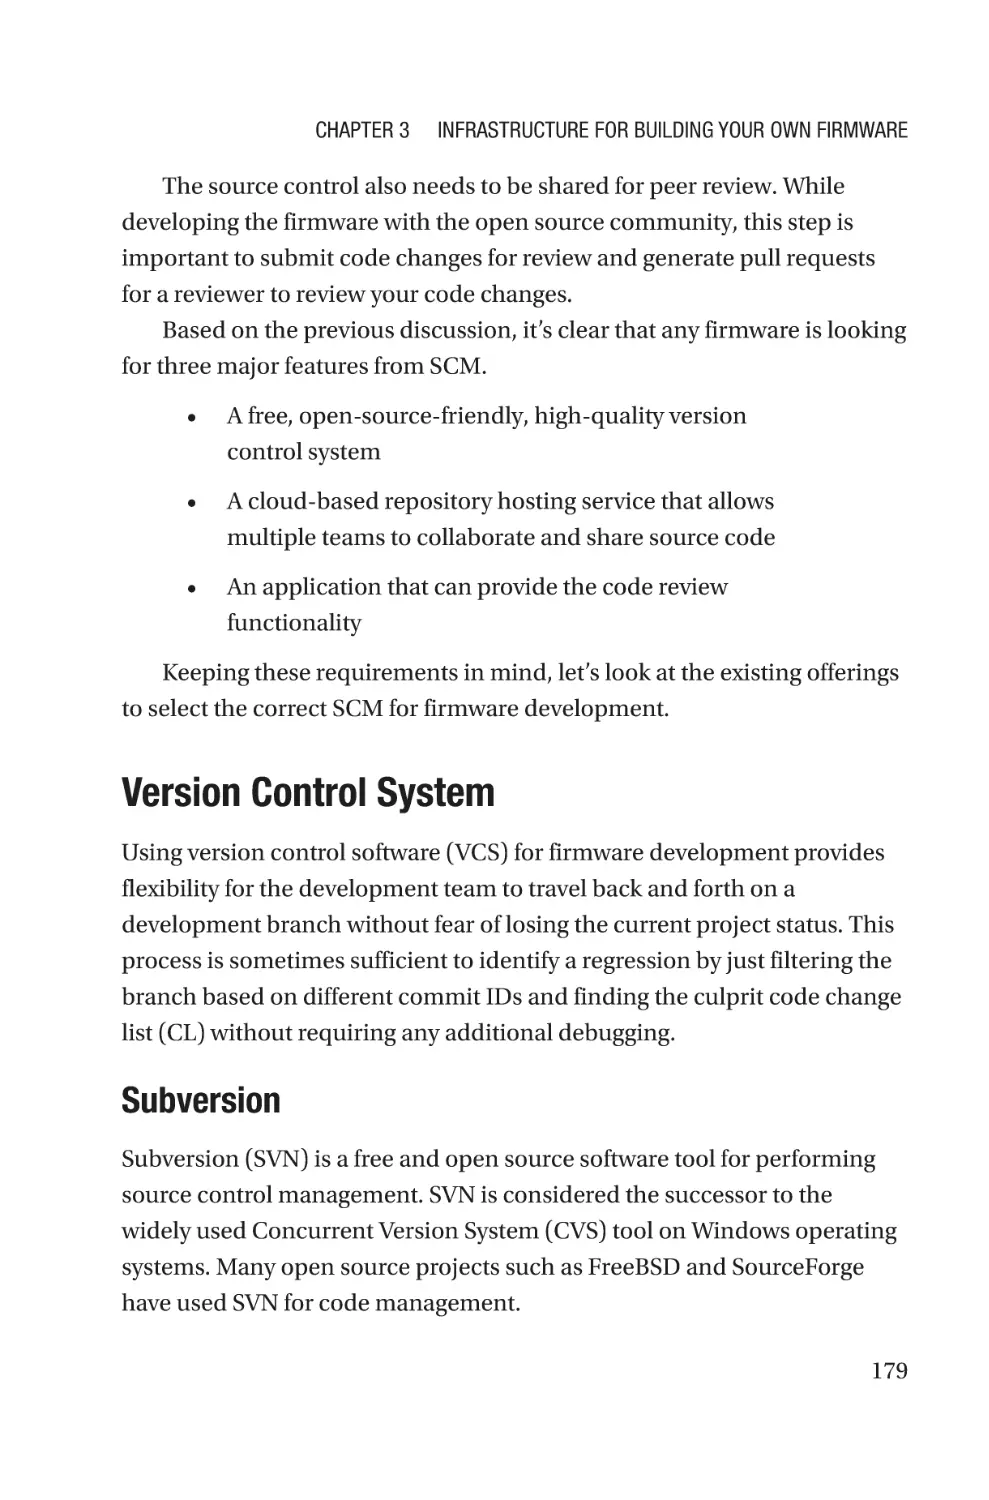 Version Control System
Subversion